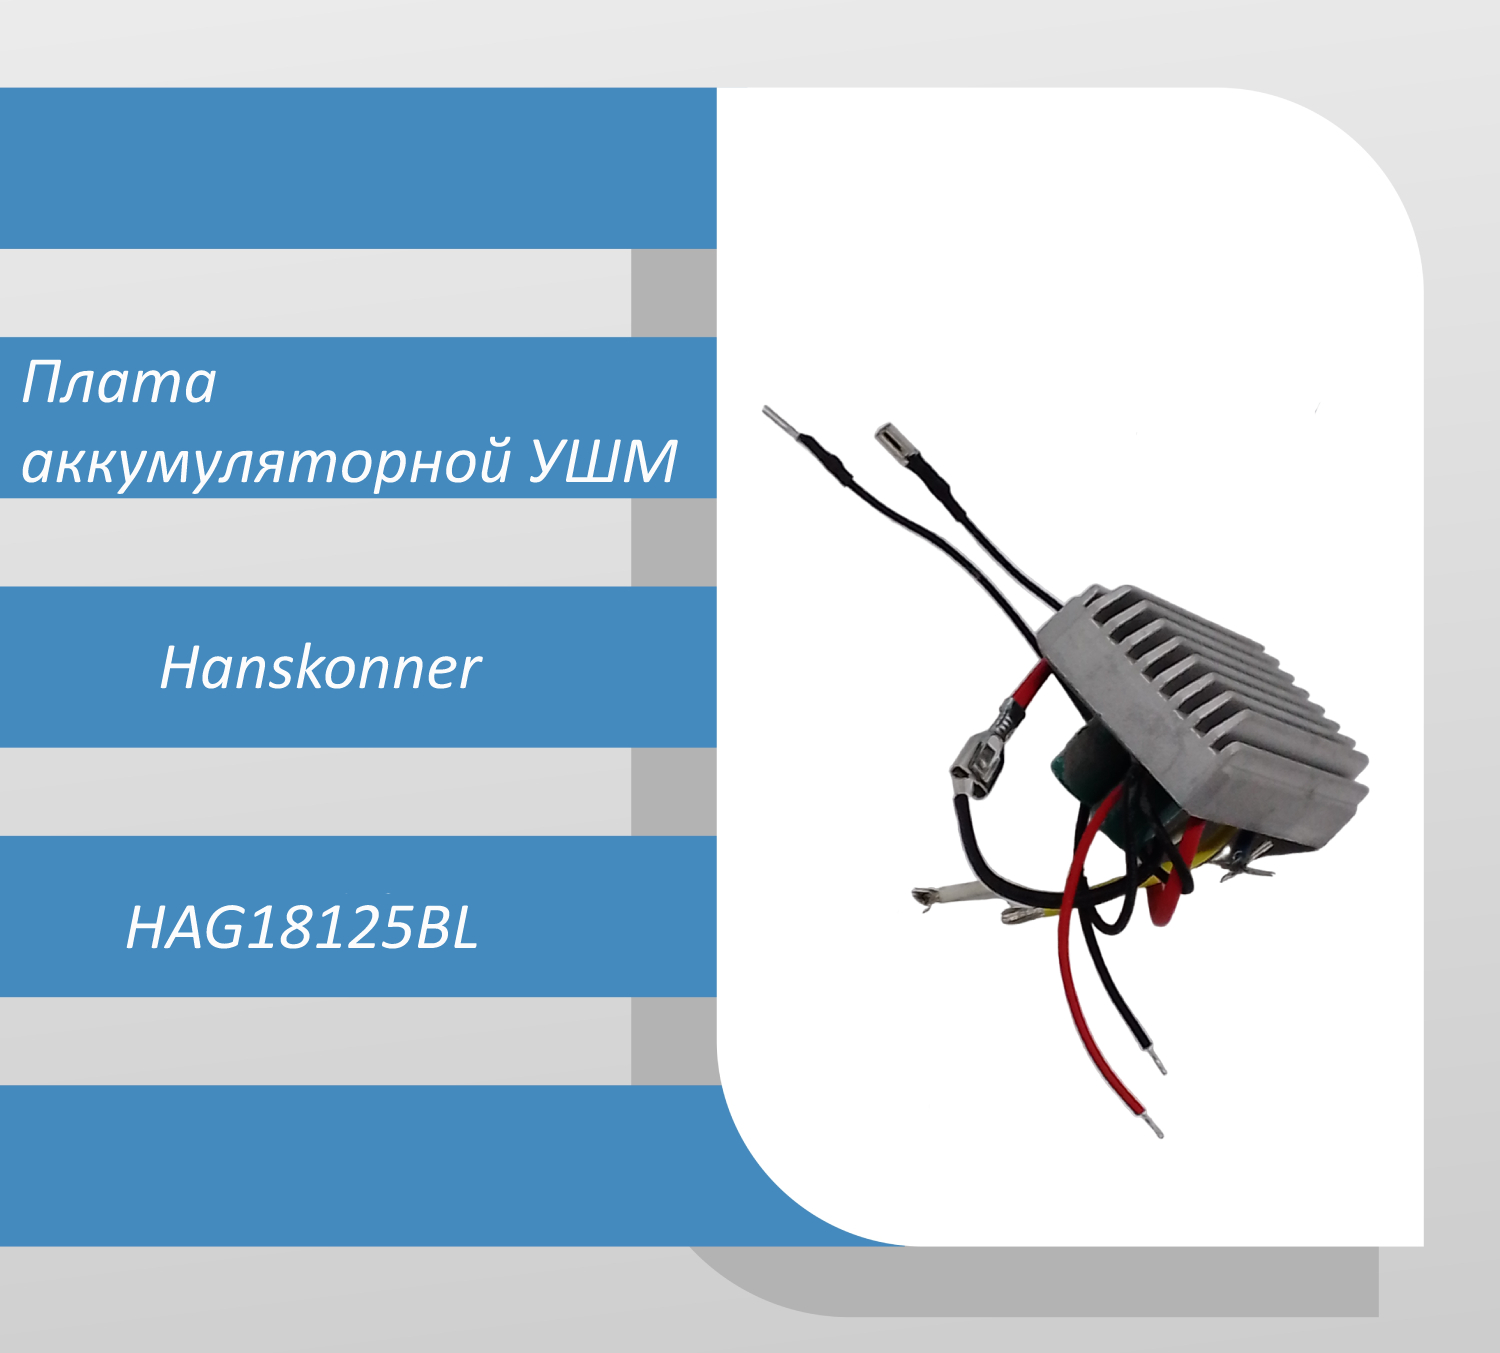 Hanskonner hag18125bl. Плата для аккумуляторной болгарки 2042. Клавиша выключателя для болгарки Hanskonner.